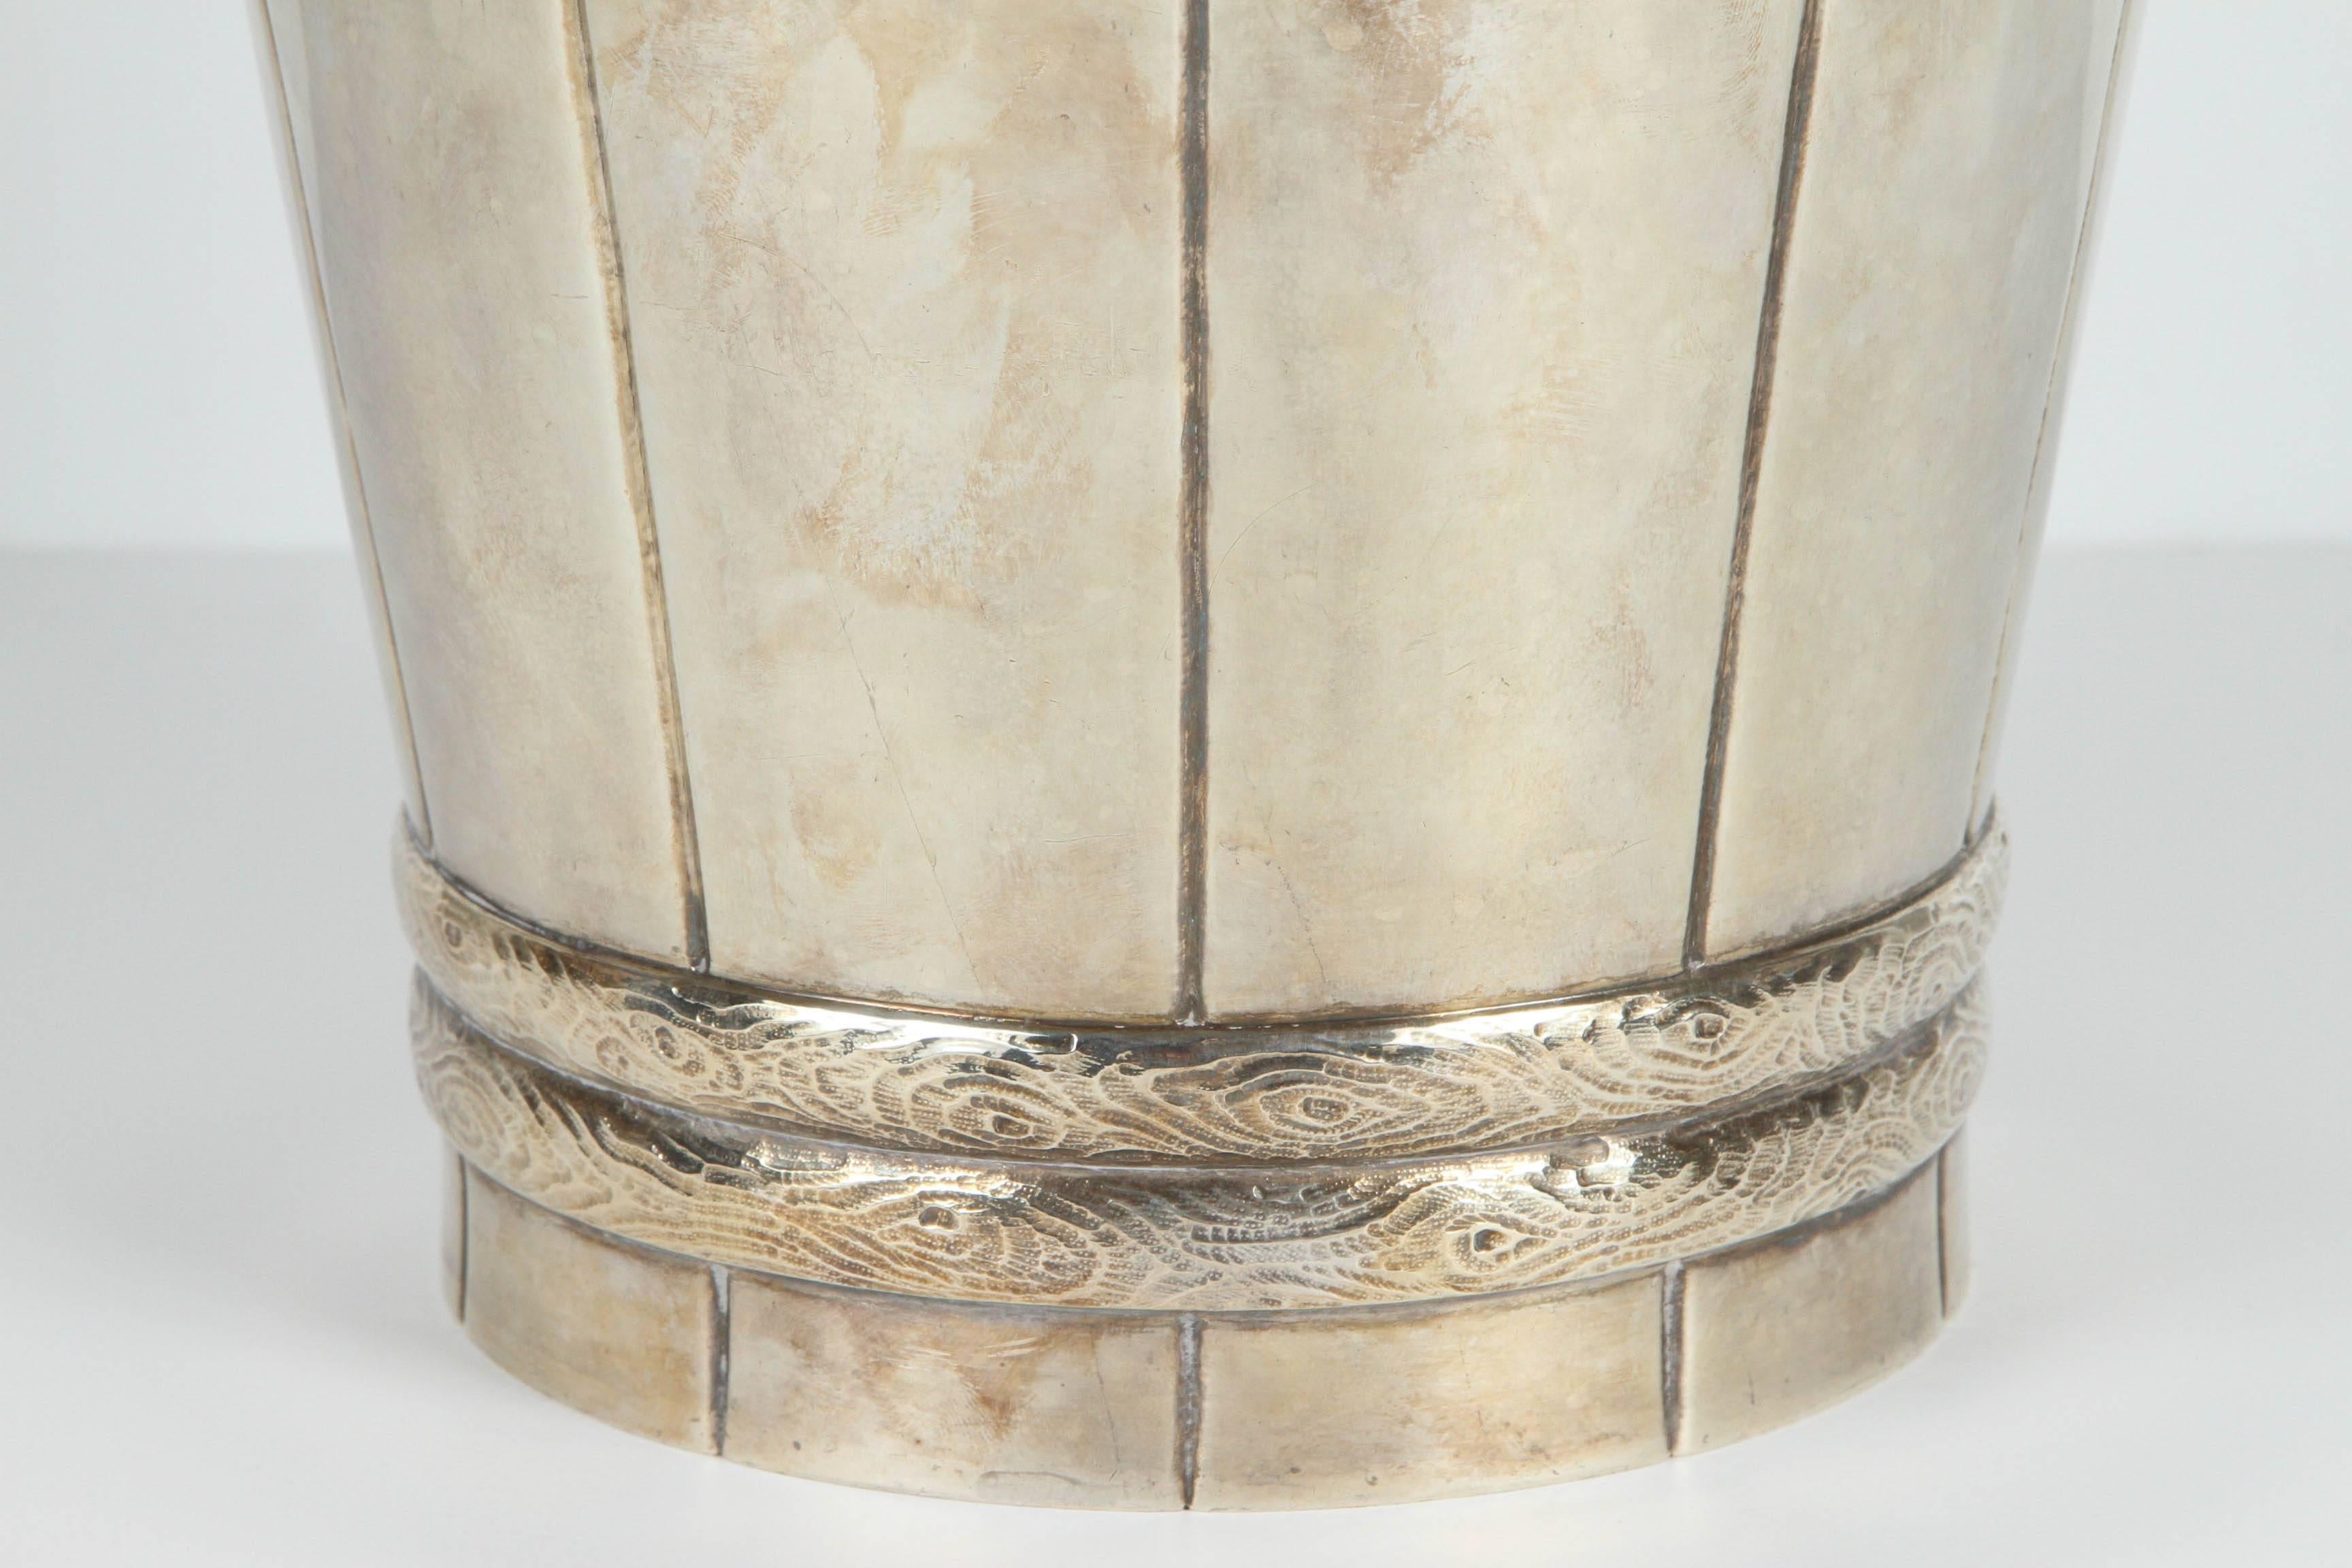 tiffany ice bucket silver 1857